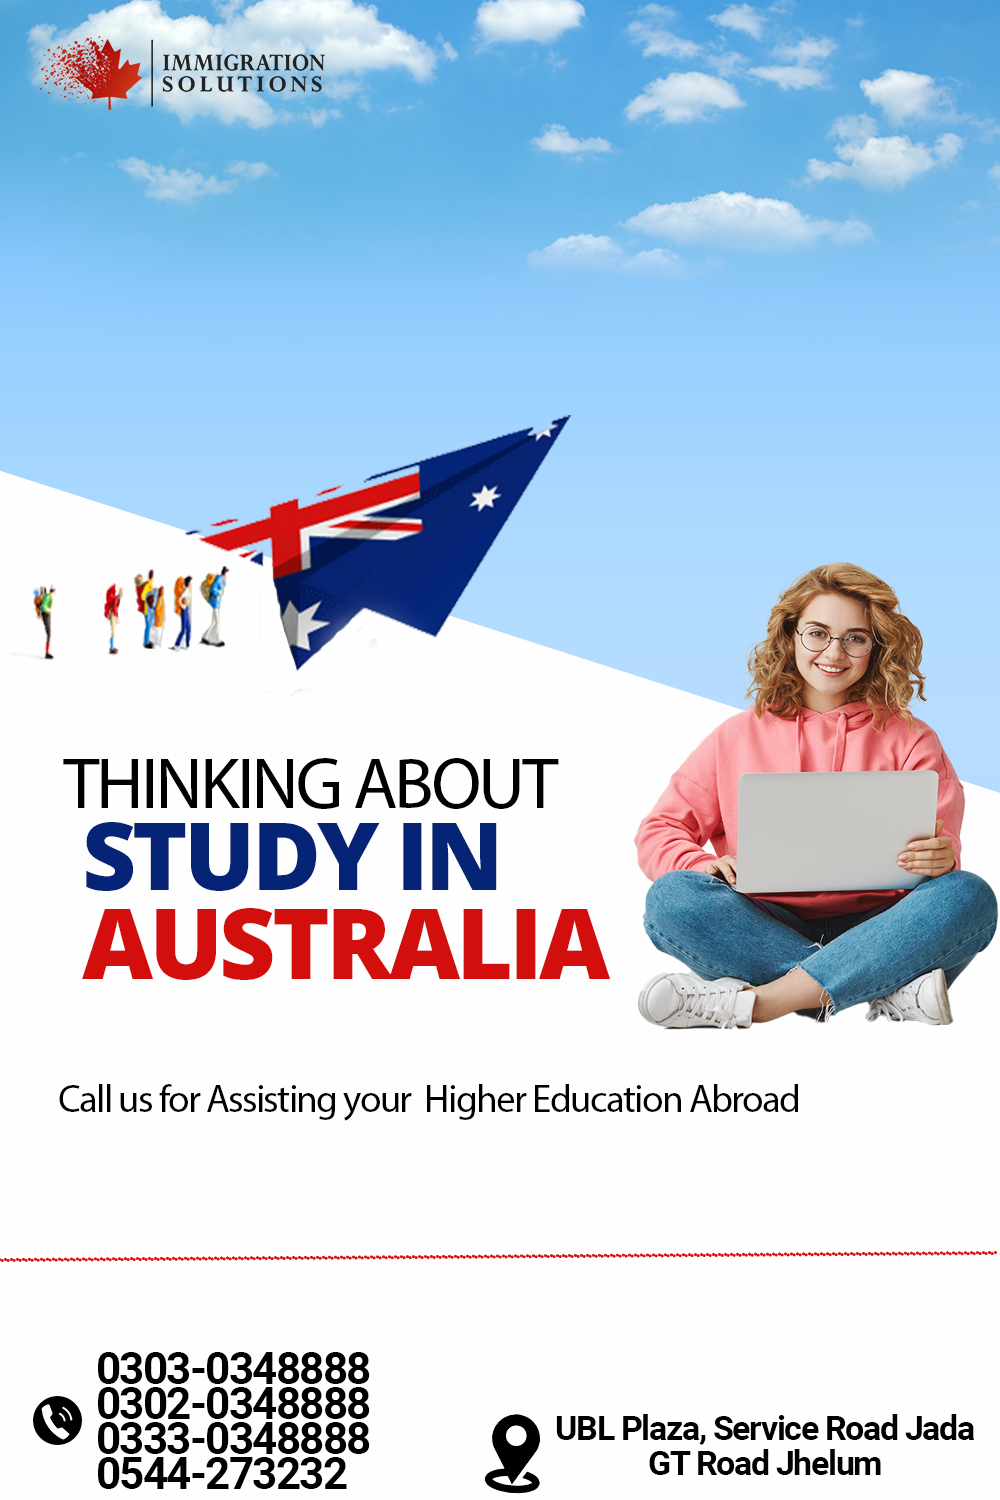 study in Australia| Consultants Post design| Unique ideas| Eyecatching post pinterest preview image.